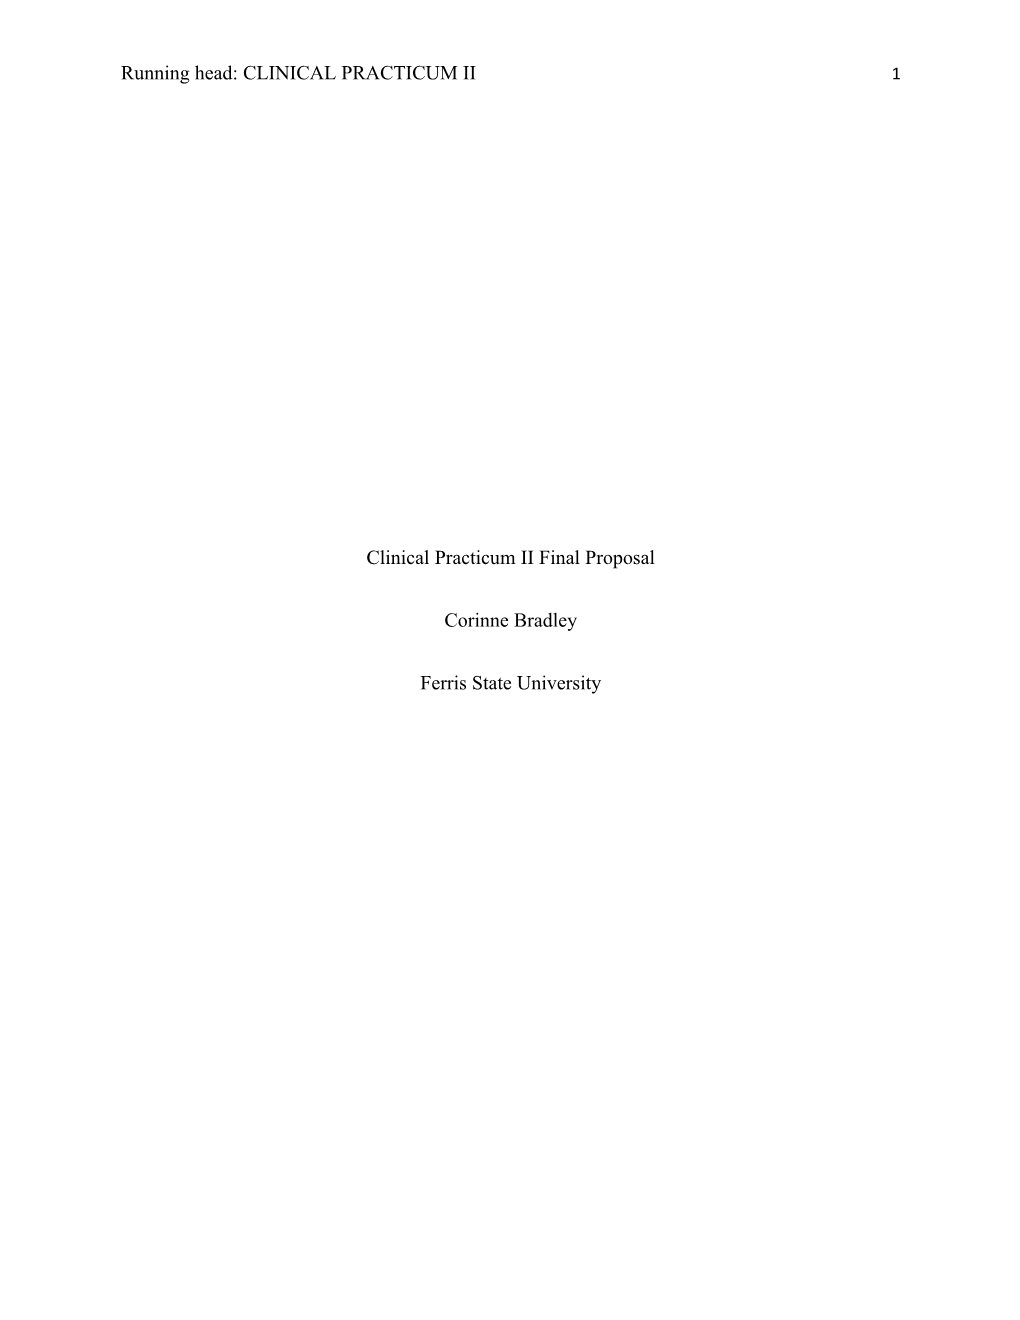 Clinical Practicum II Final Proposal